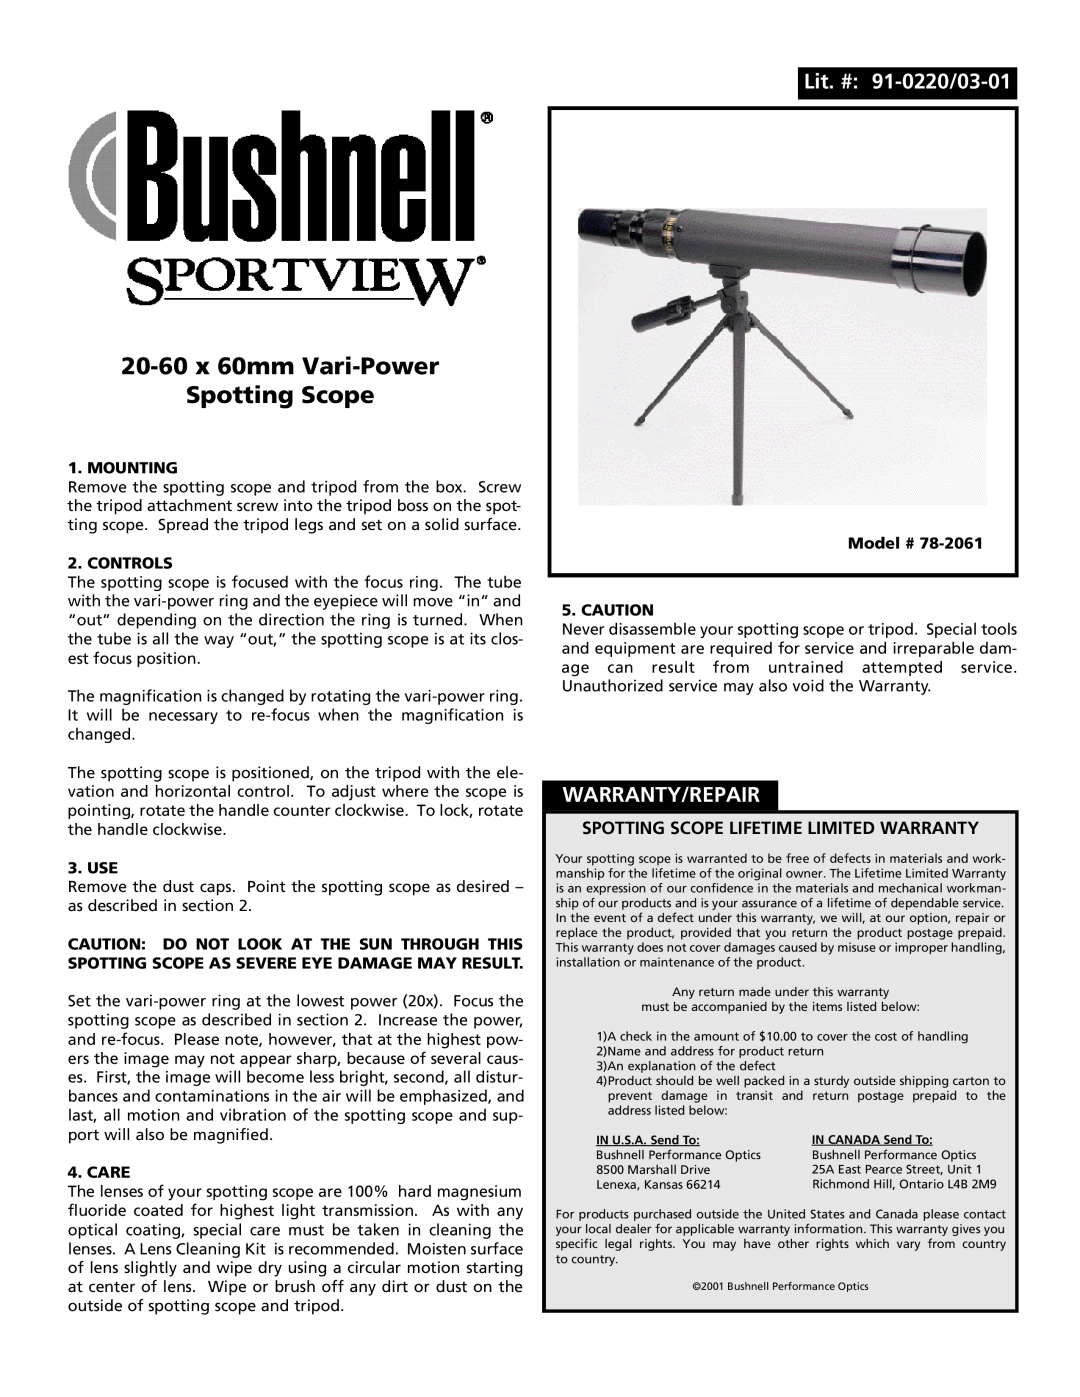 Bushnell 78-2061 warranty 20-60x 60mm Vari-Power Spotting Scope, Lit. # 91-0220/03-01, Warranty/Repair, Mounting, Controls 